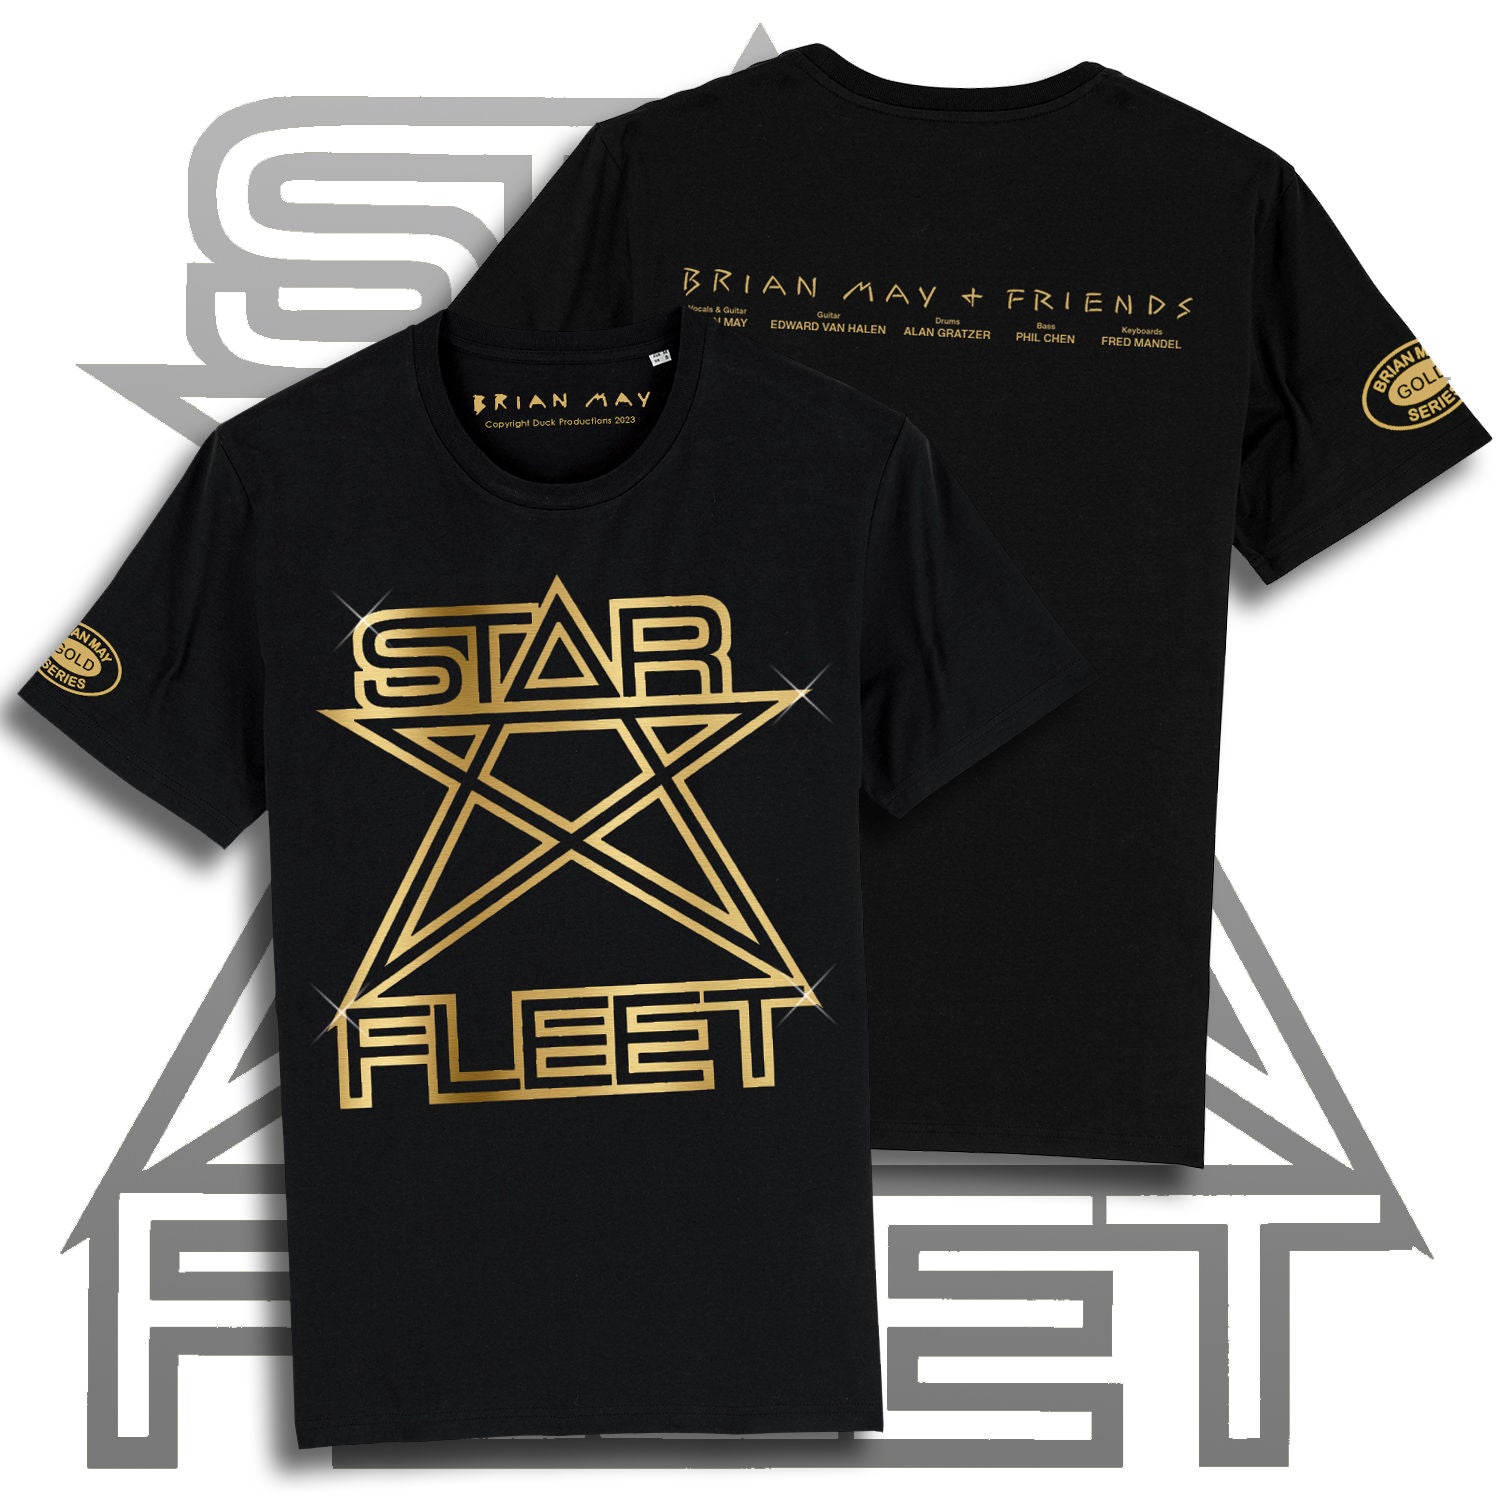 Brian May - Collectors Gold Logo Star Fleet T-Shirt